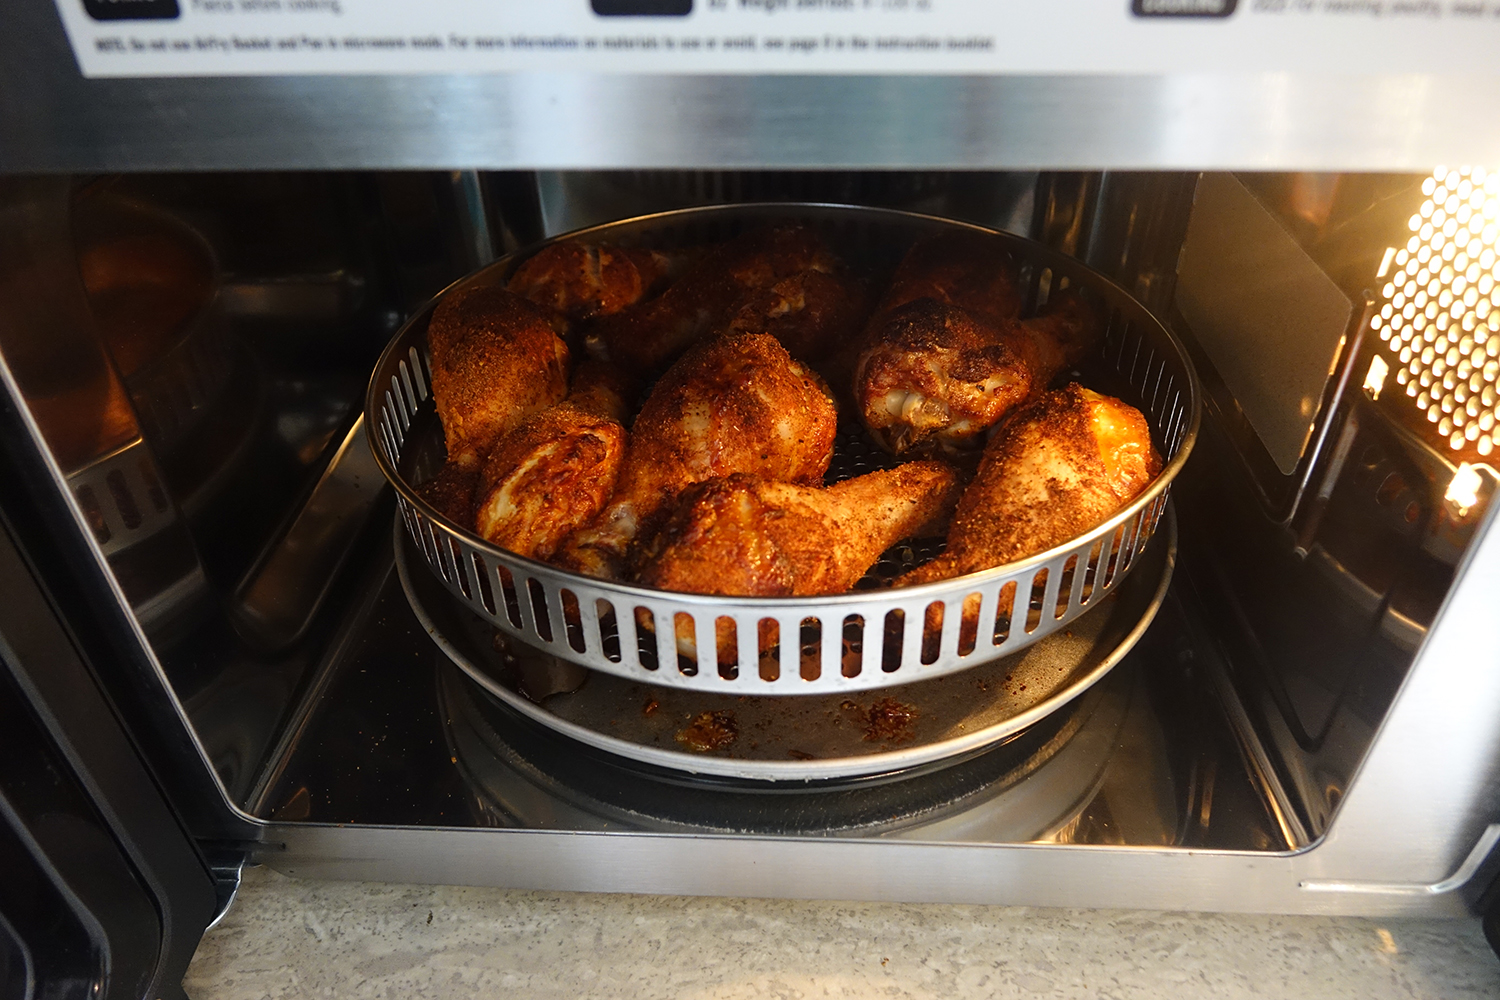 https://blog.bestbuy.ca/wp-content/uploads/2021/06/cuisinart-air-fryer-chicken-drumsticks-cooking.jpg